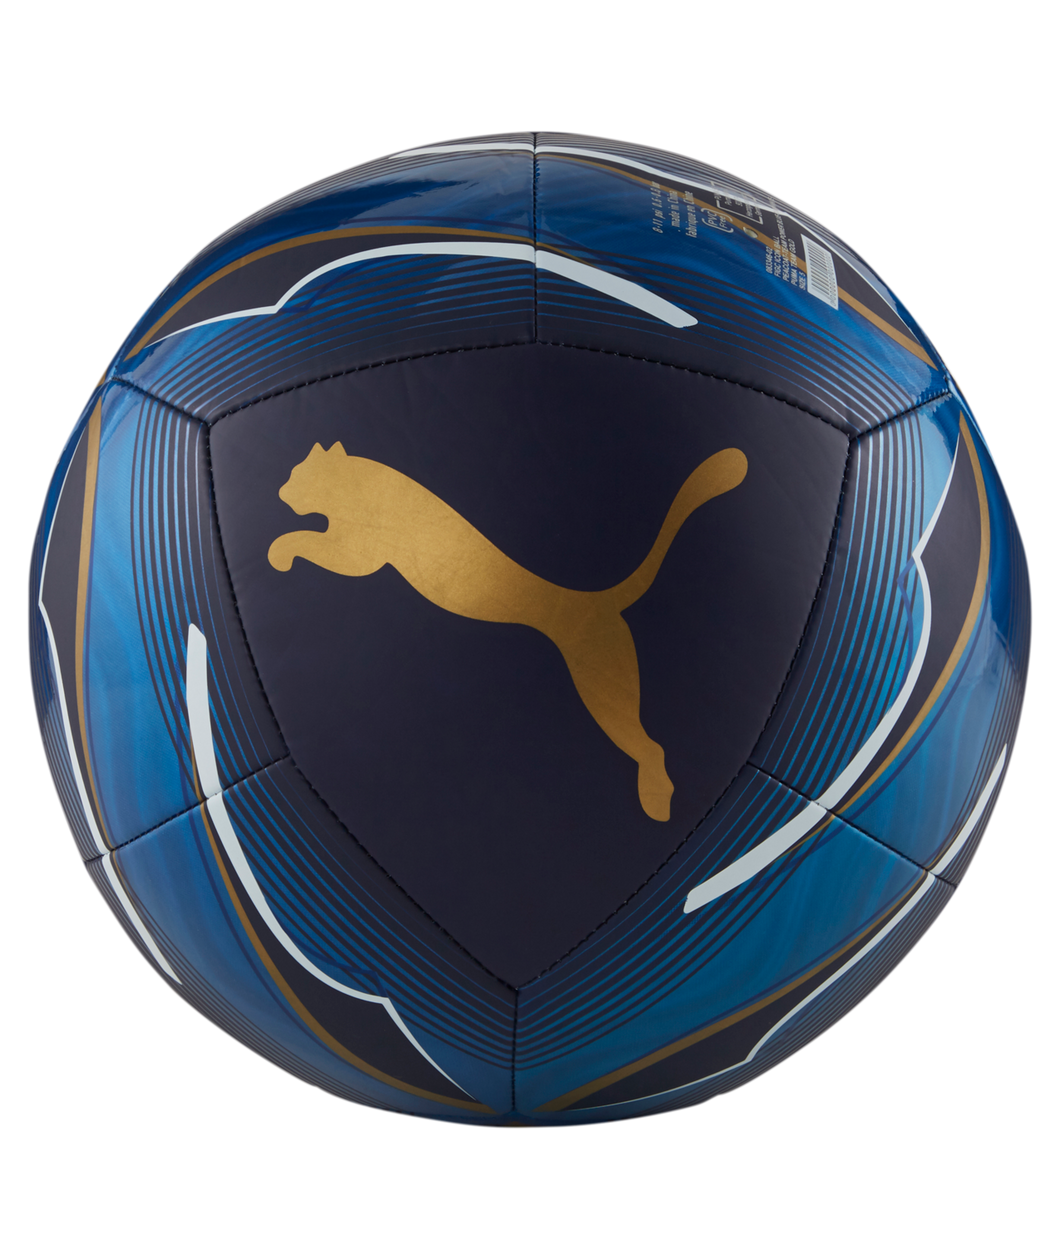 Puma FIGC ICON Ball 083346 02